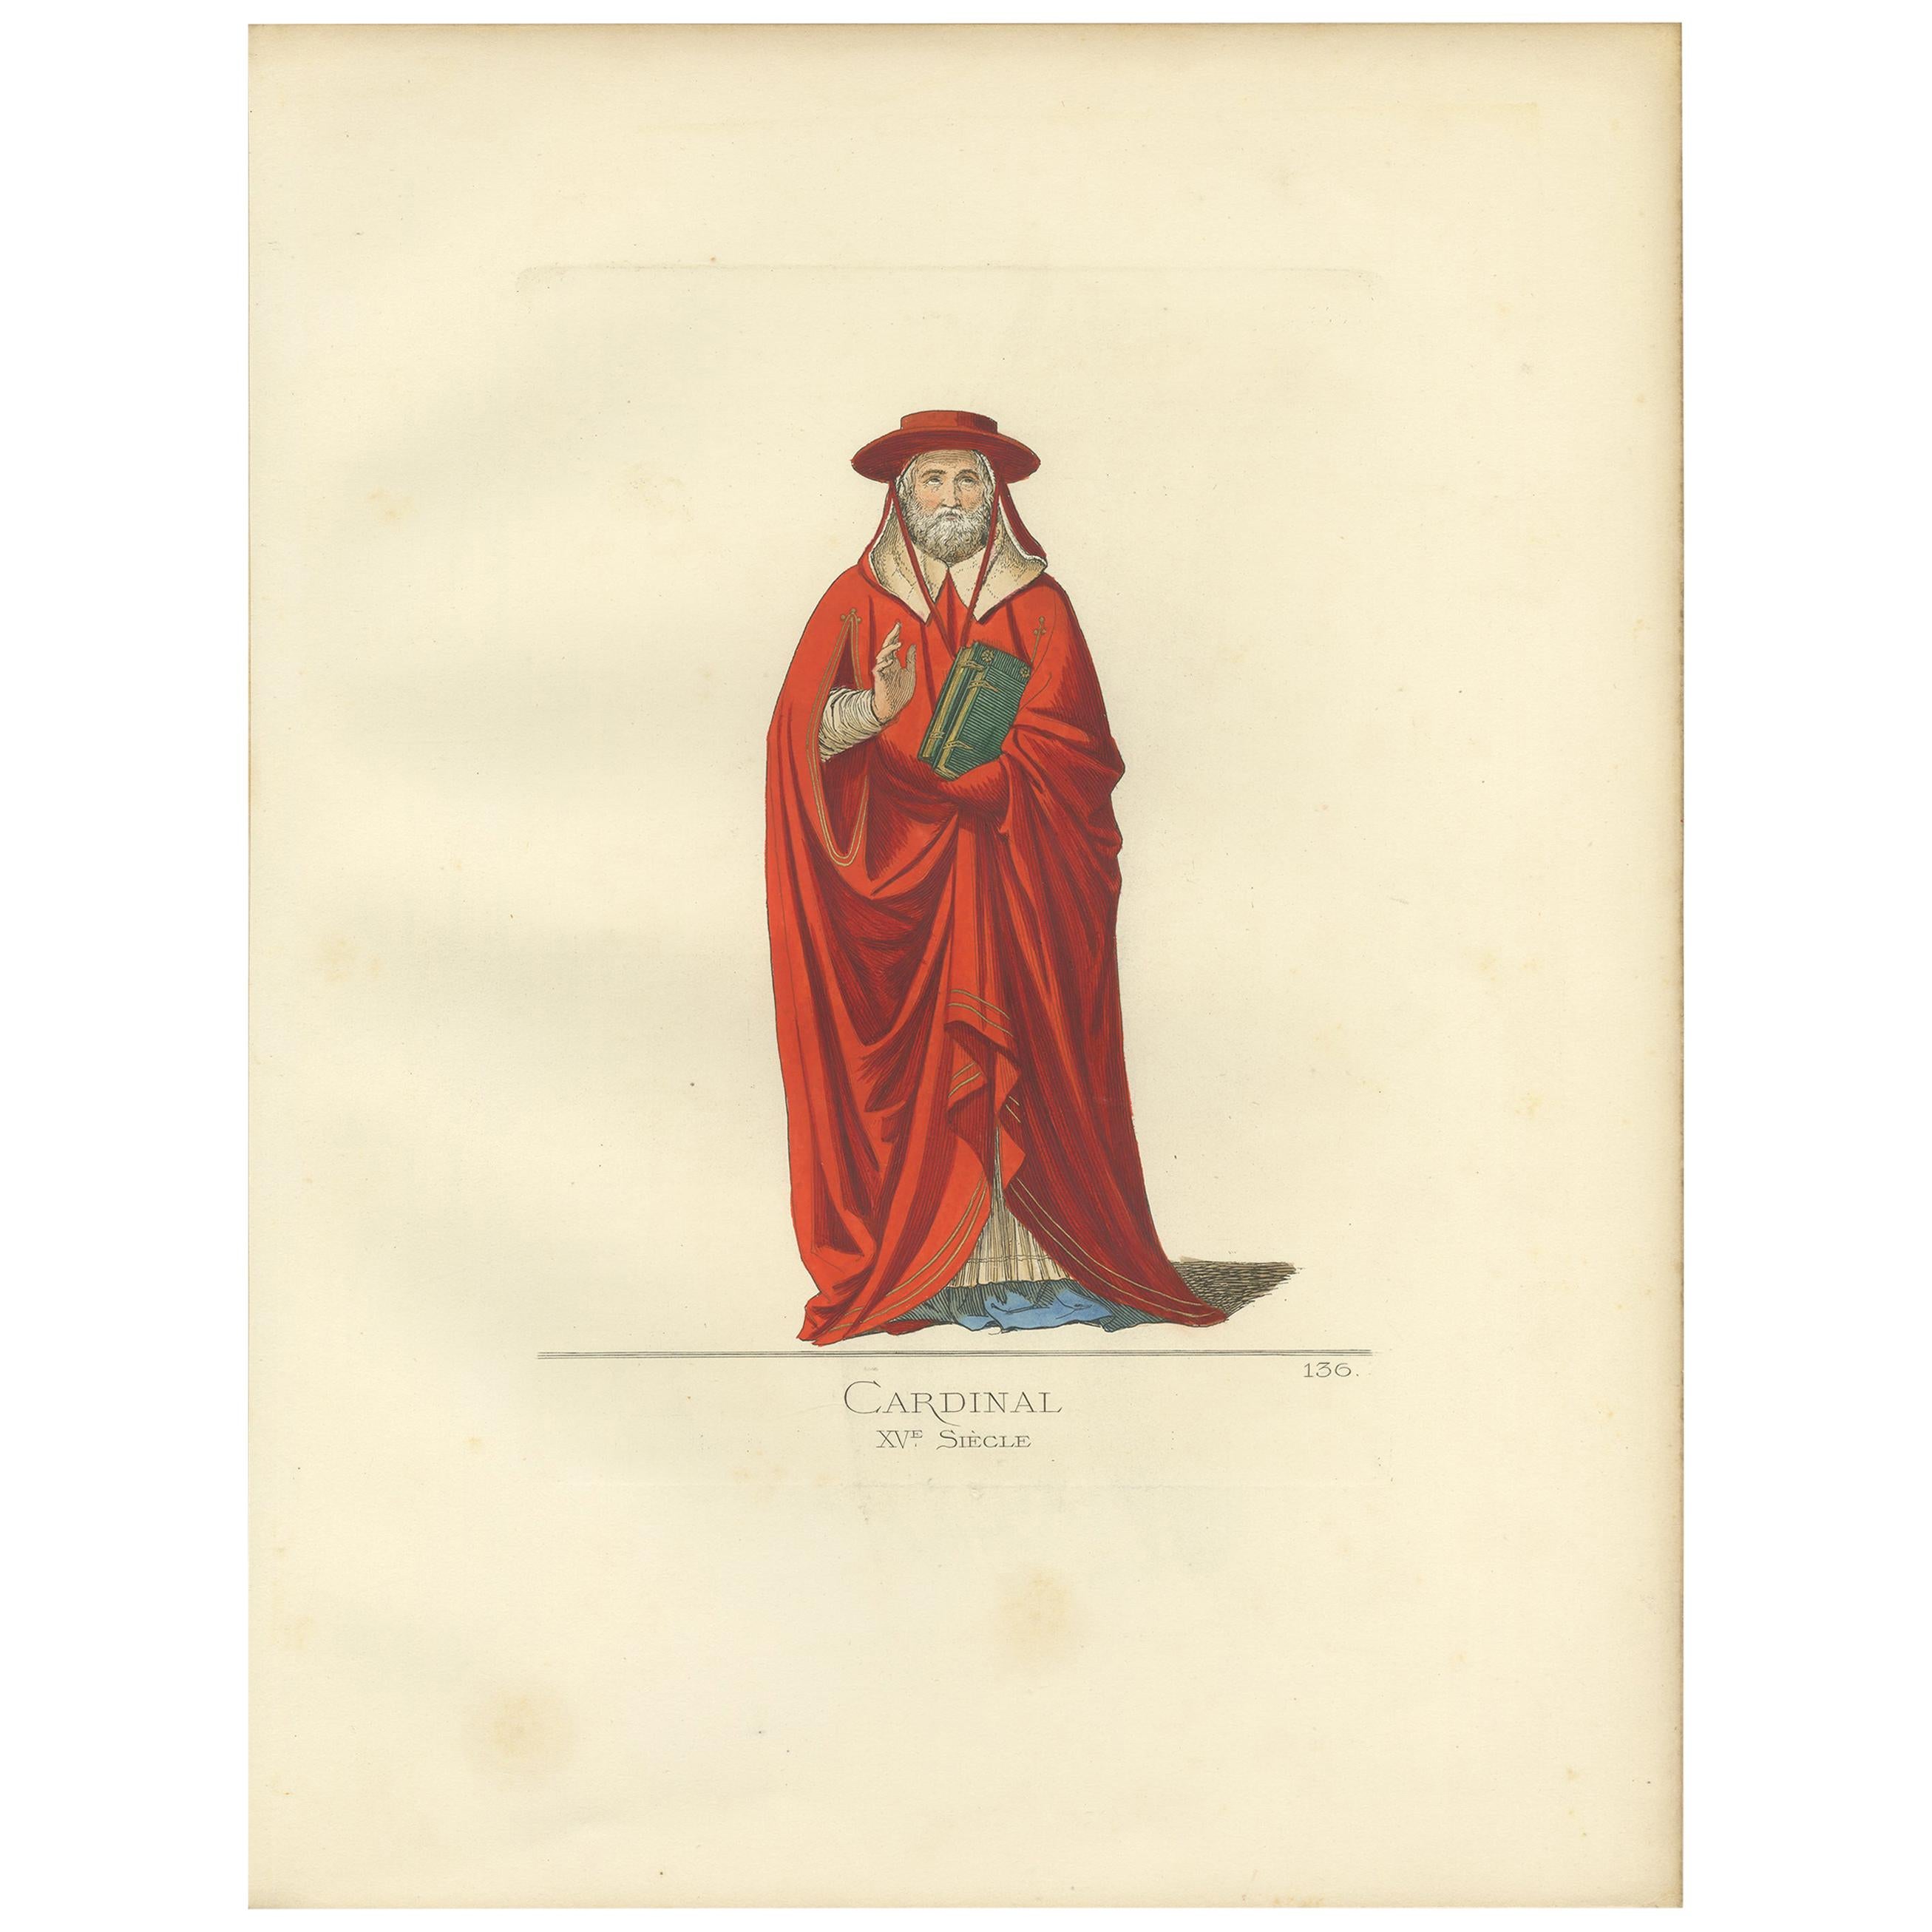 Antique Print of a Cardinal, 15th Century, by Bonnard, 1860